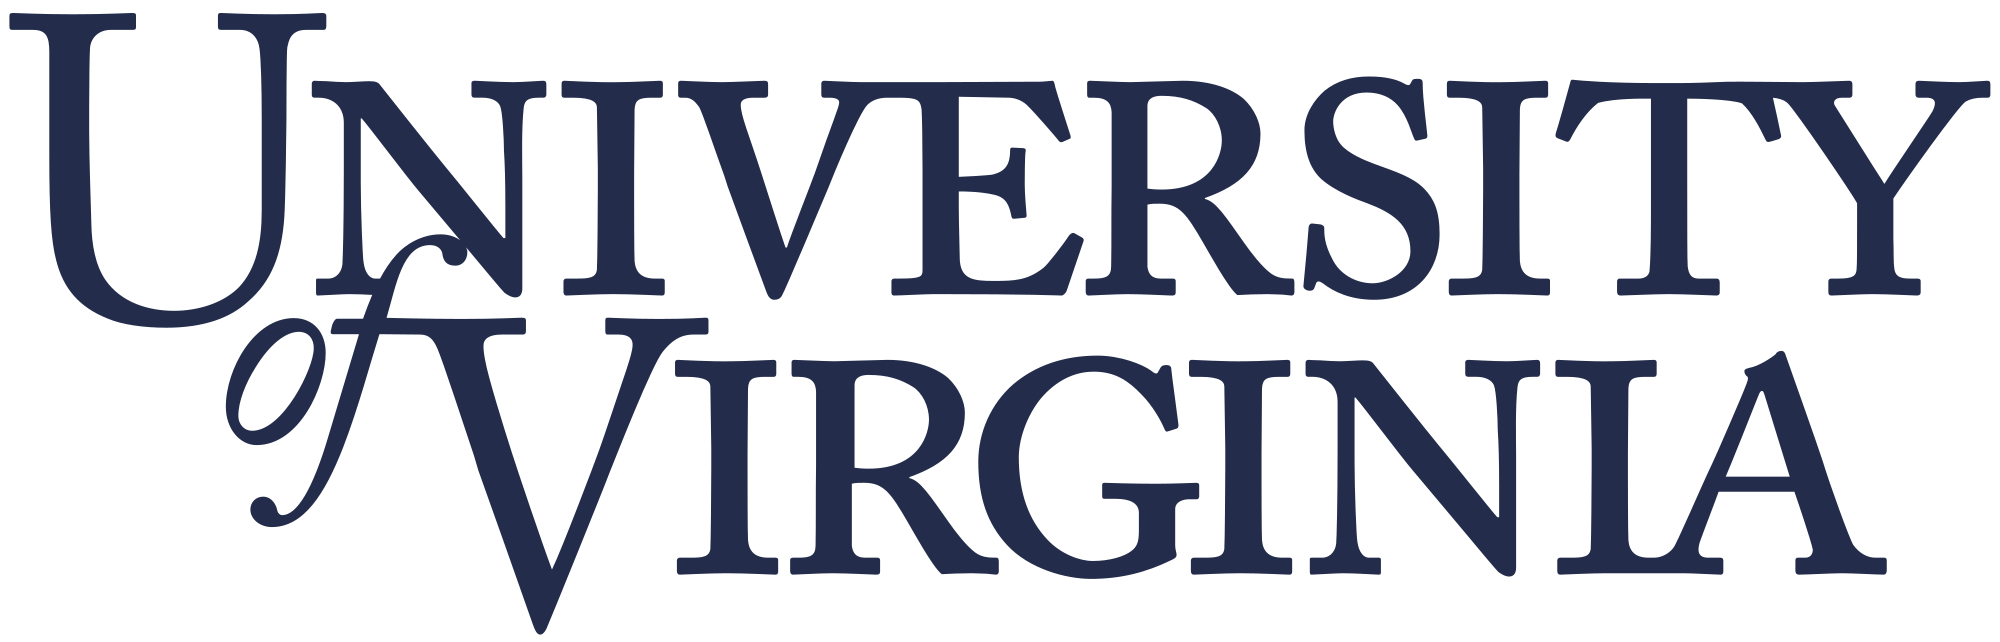 Virginia Logo - File:University of Virginia logo.svg - Wikimedia Commons